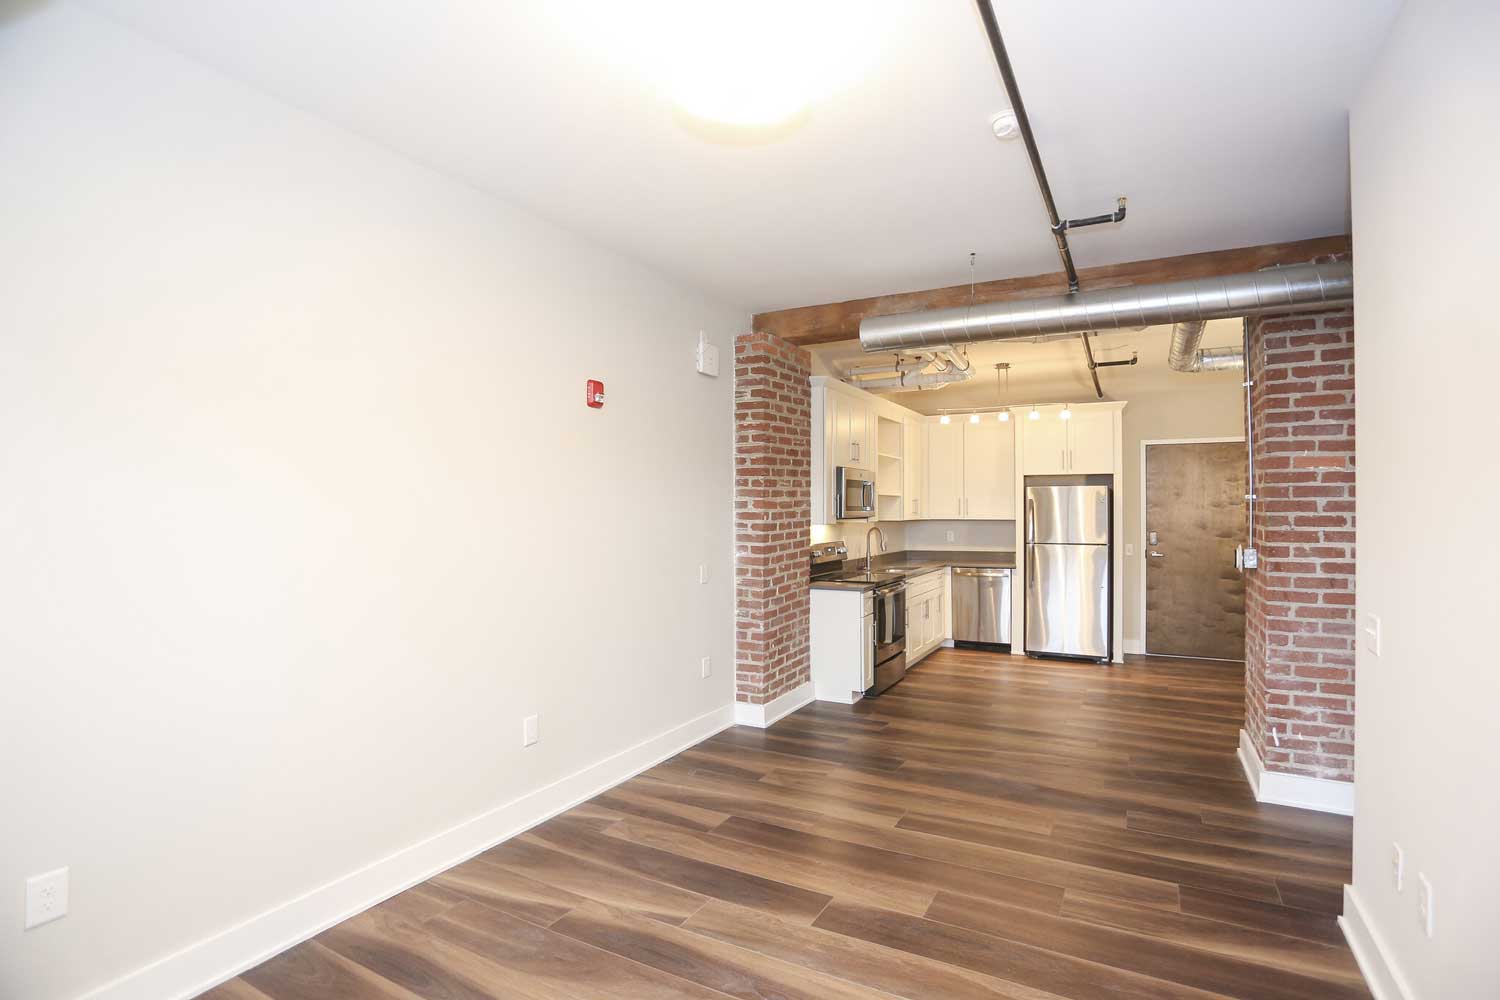 Loft-style Room Space in OGGI Lofts Apartments, Kansas City